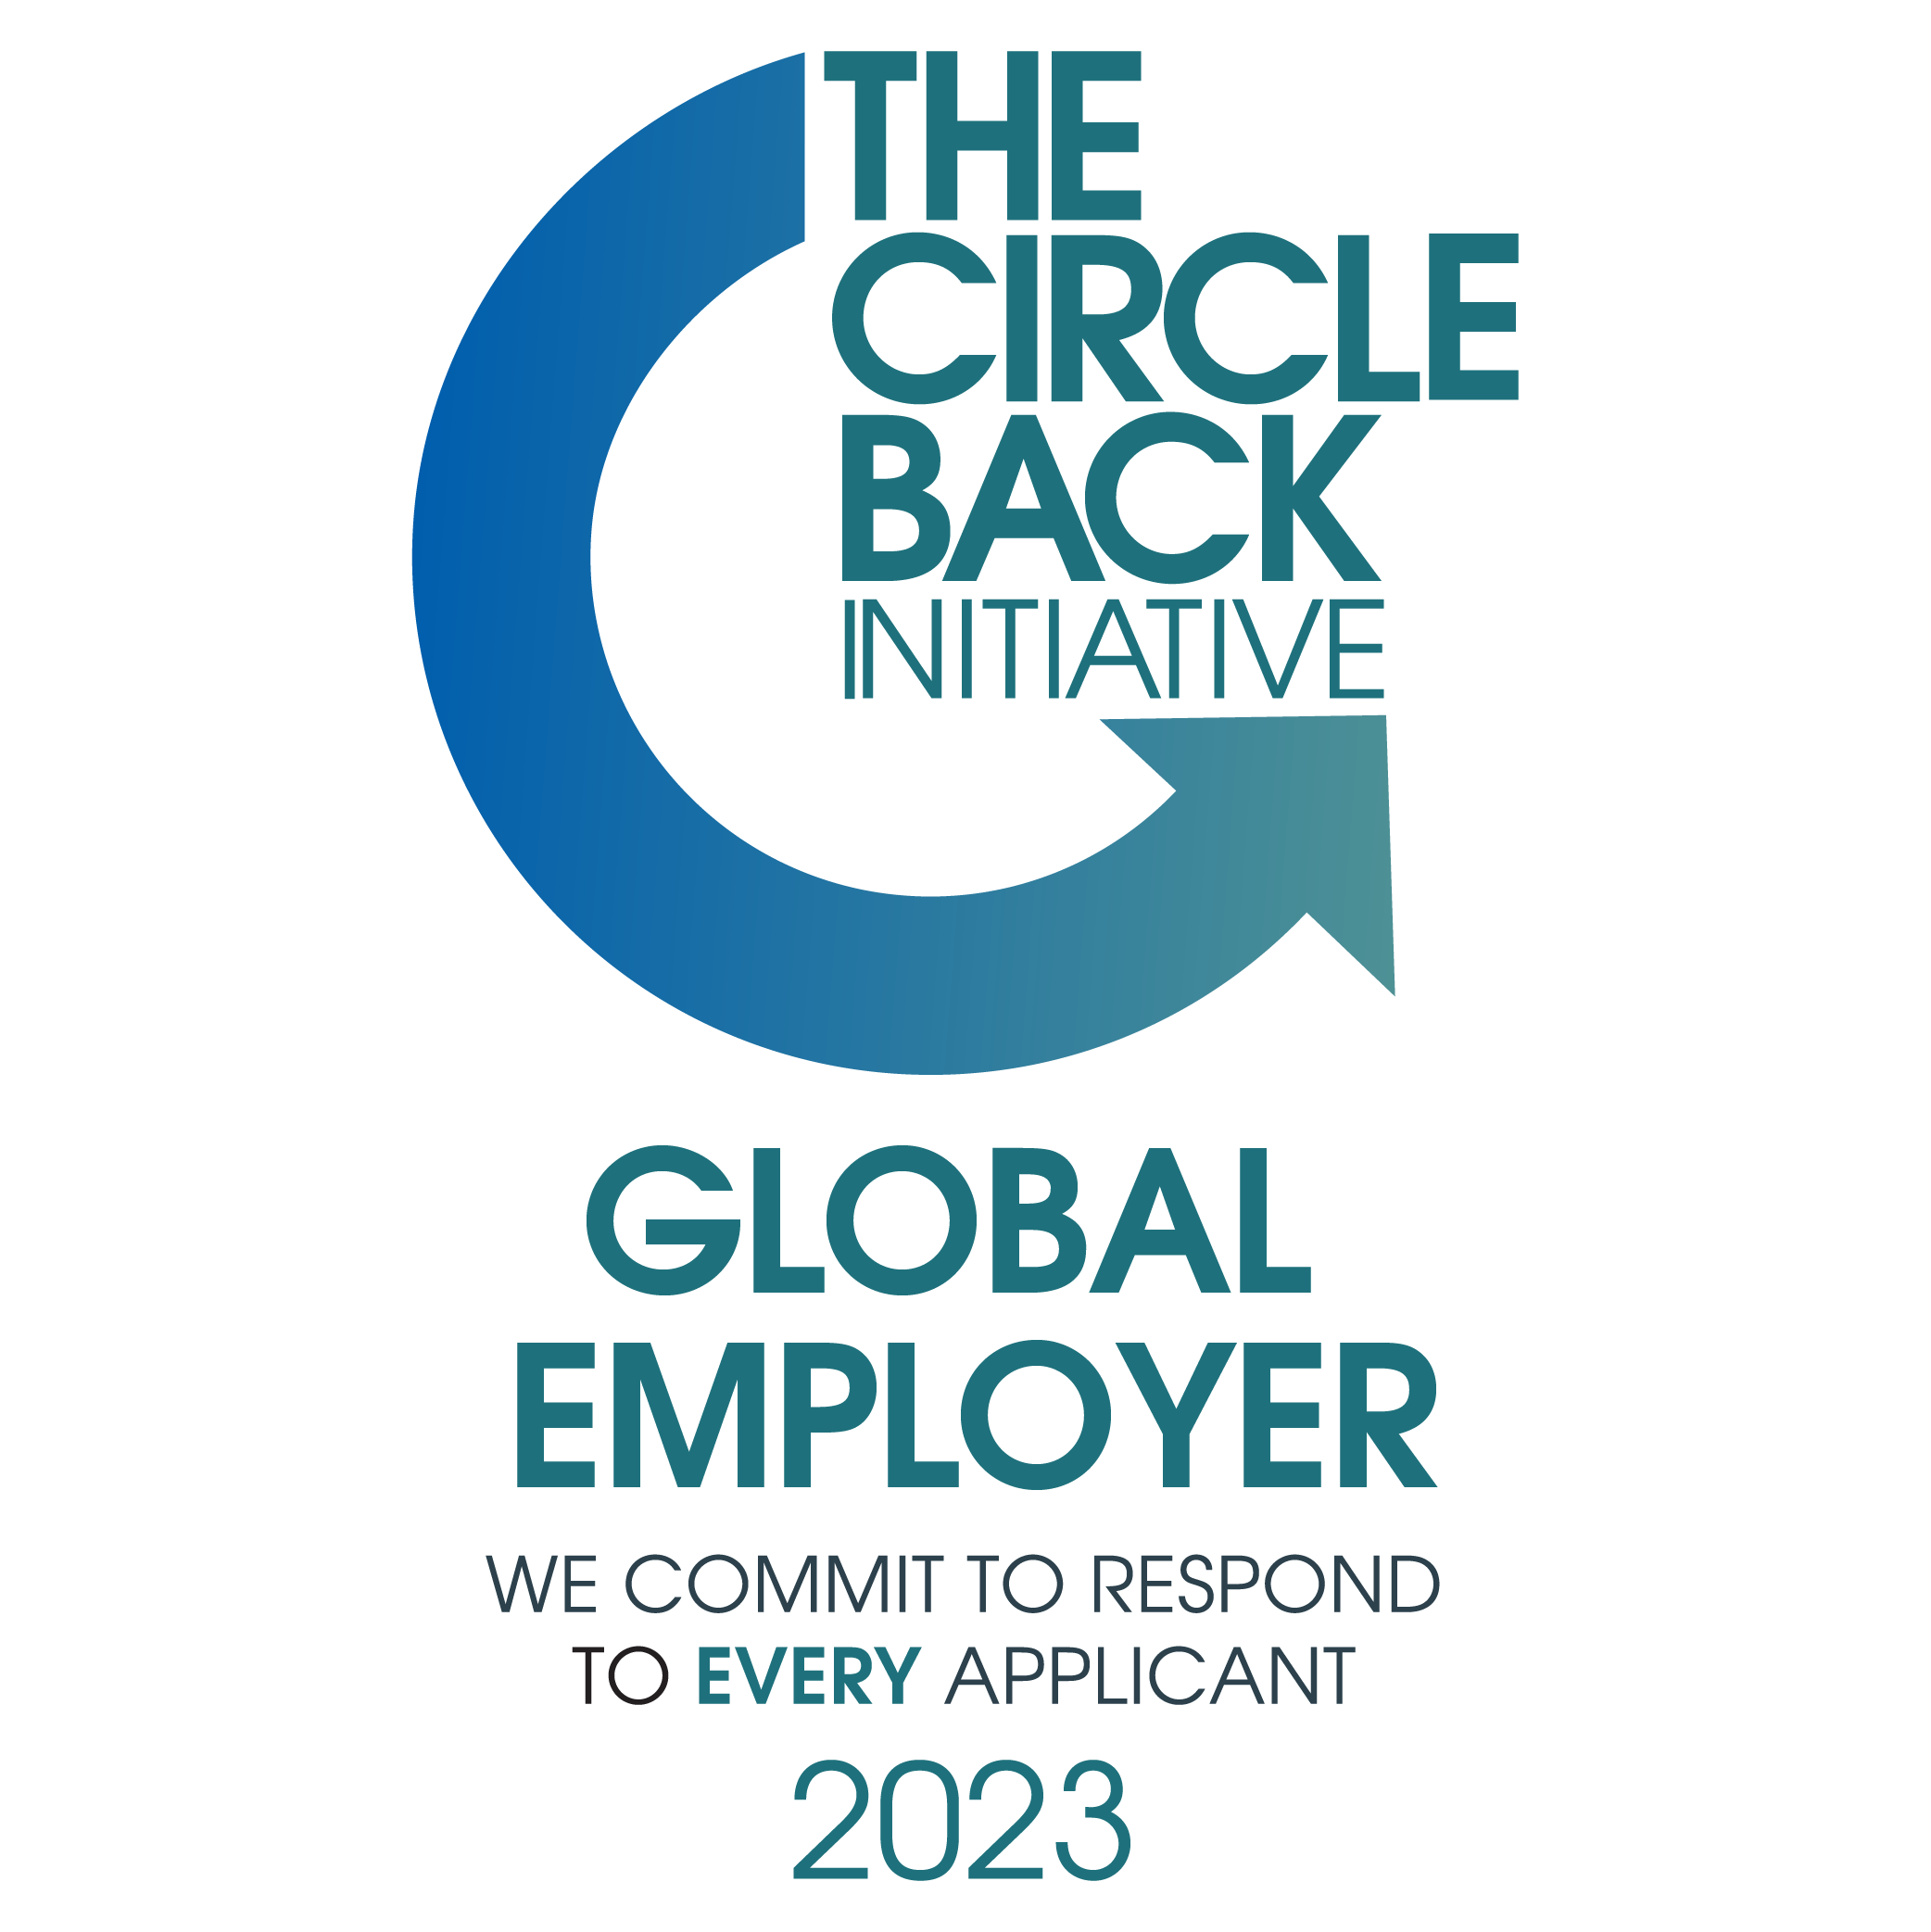 The Circle Back Initiative